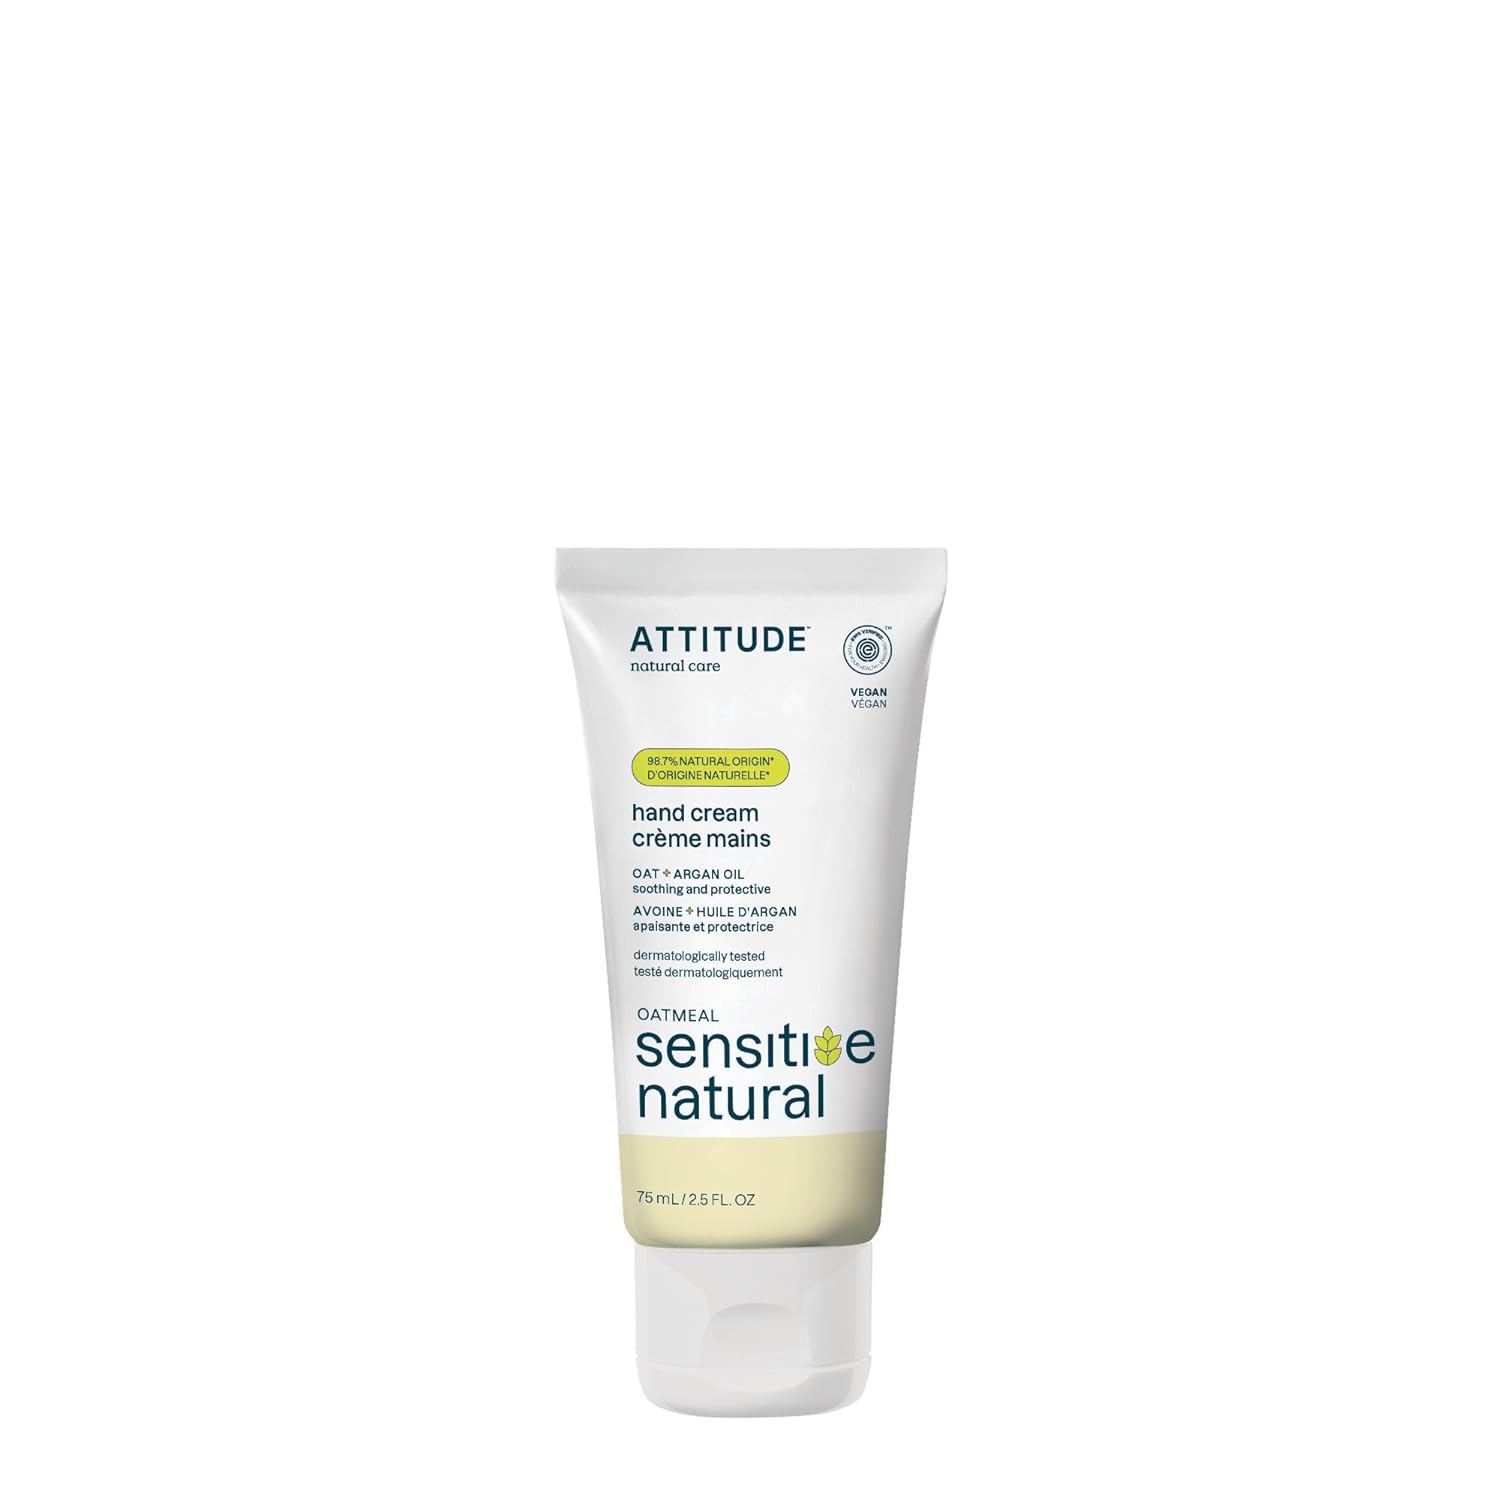 ATTITUDE Hand Cream for Sensitive Skin with Oat and Argan Oil, EWG Verified, Dermatologically Tested, Vegan, 2.5 Fl Oz